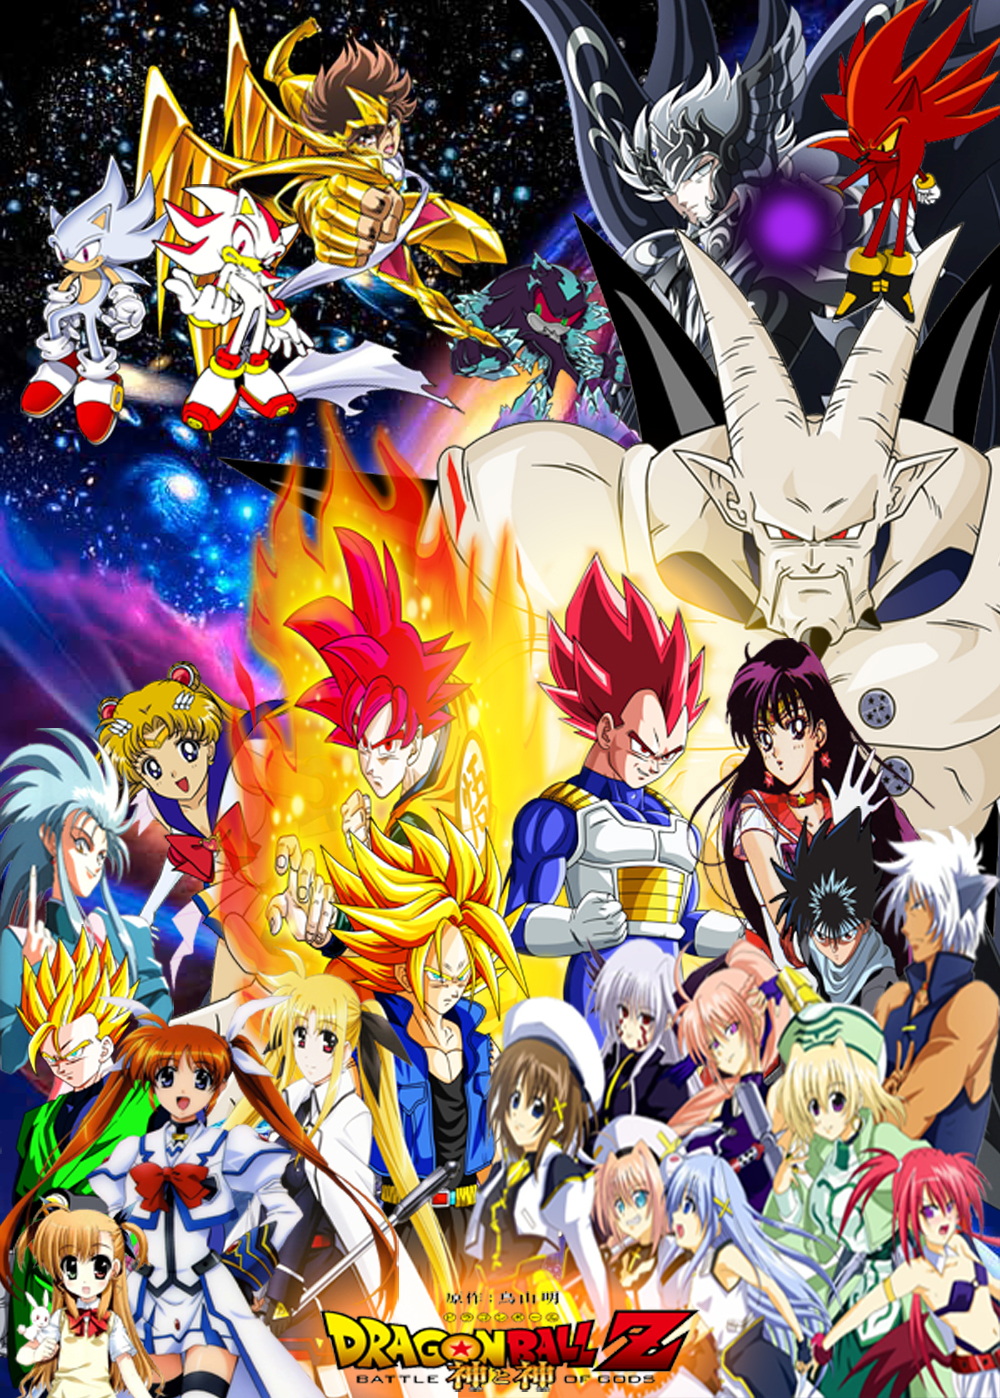 Dragon Ball Z Character Wallpaper by Tanish84 on DeviantArt